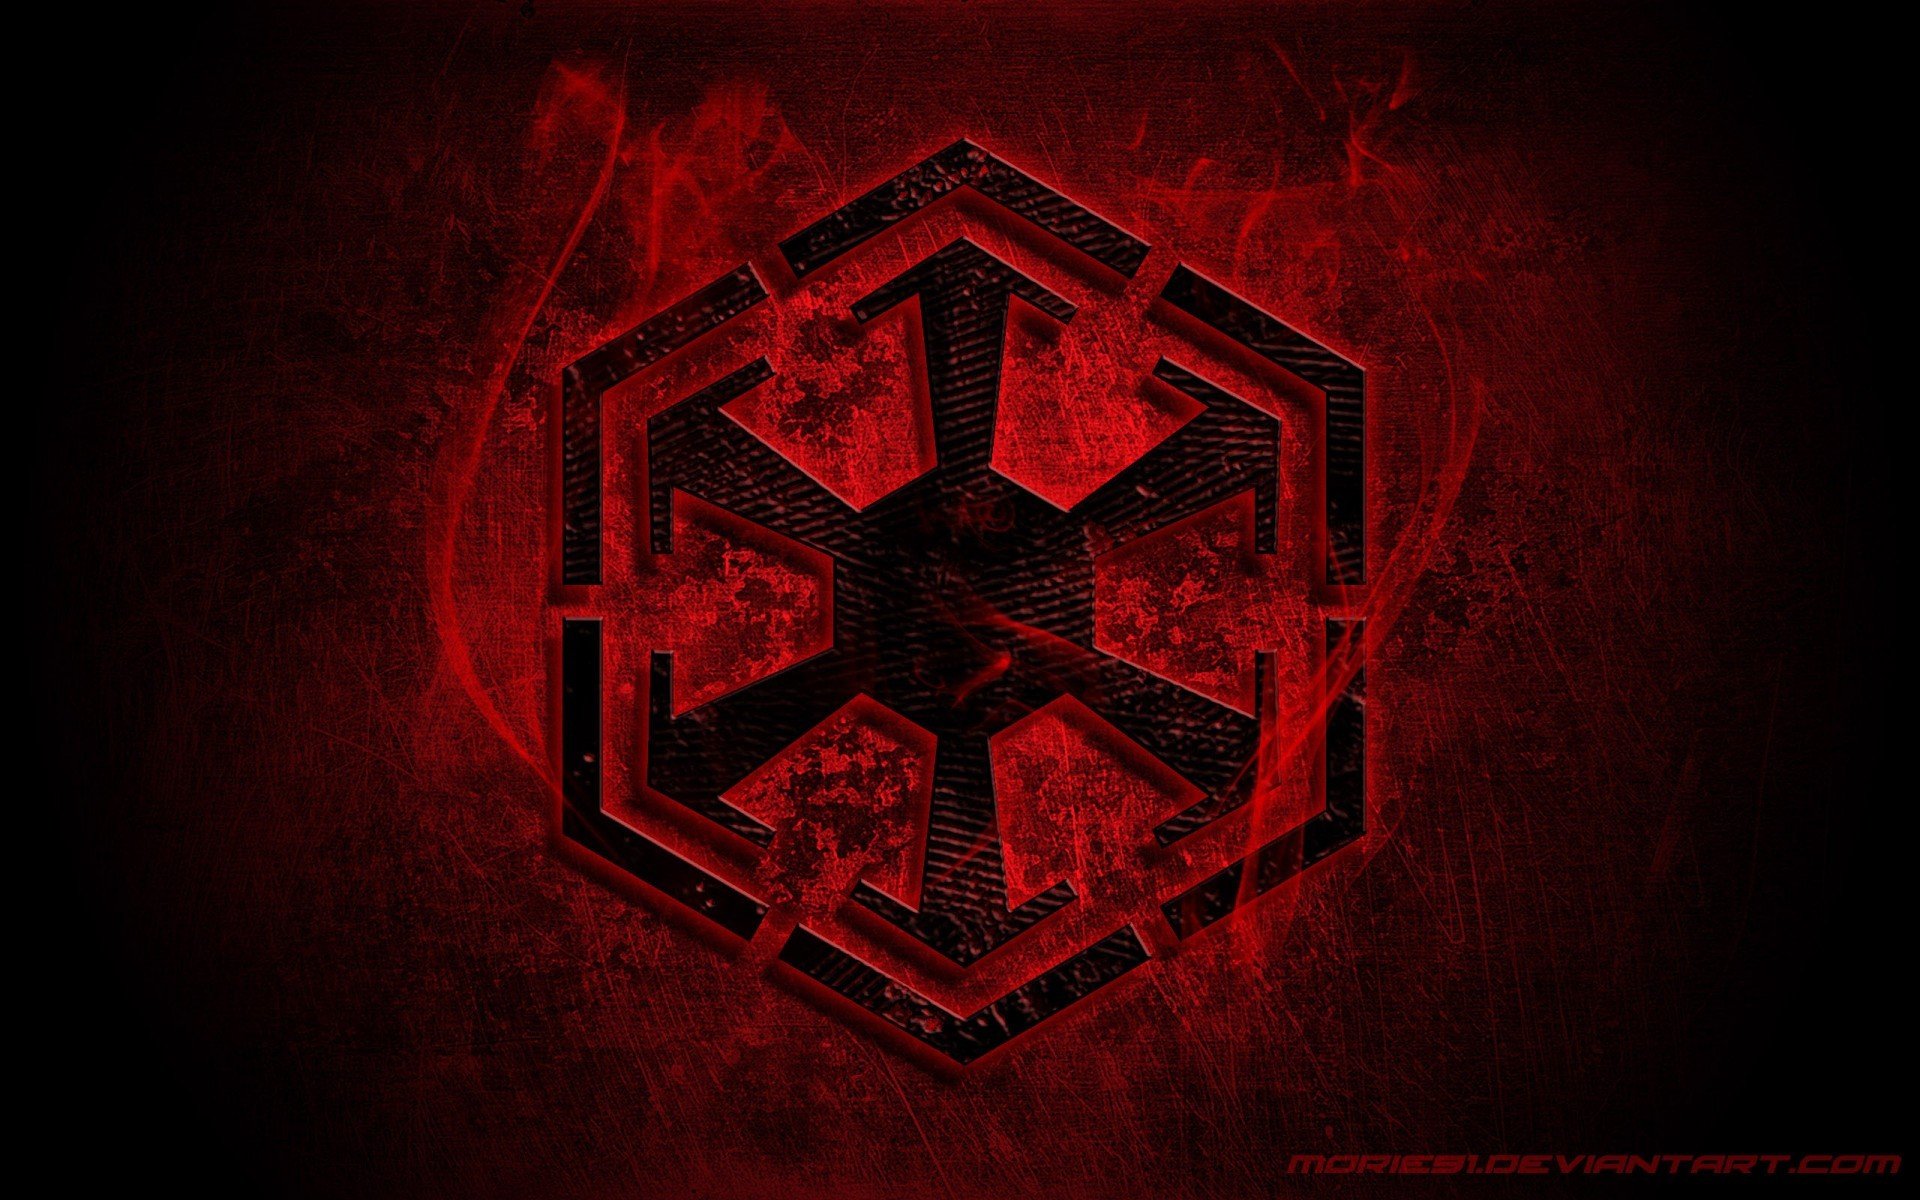 Star wars the old republic Sith logo wallpaper 1920x1200 1920x1200